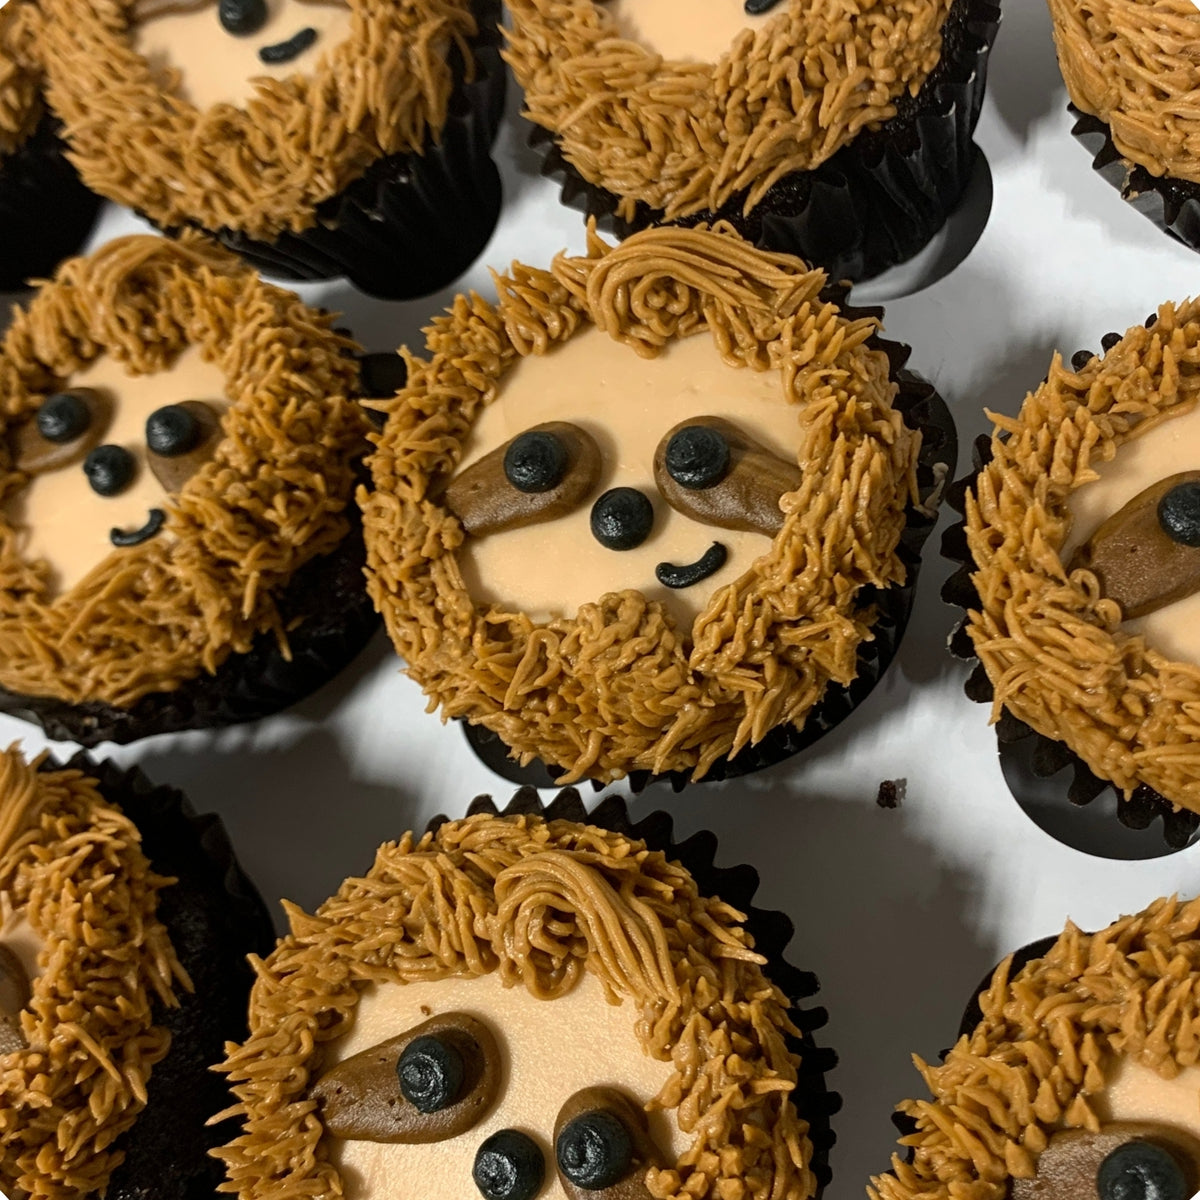 Sloth Cupcakes